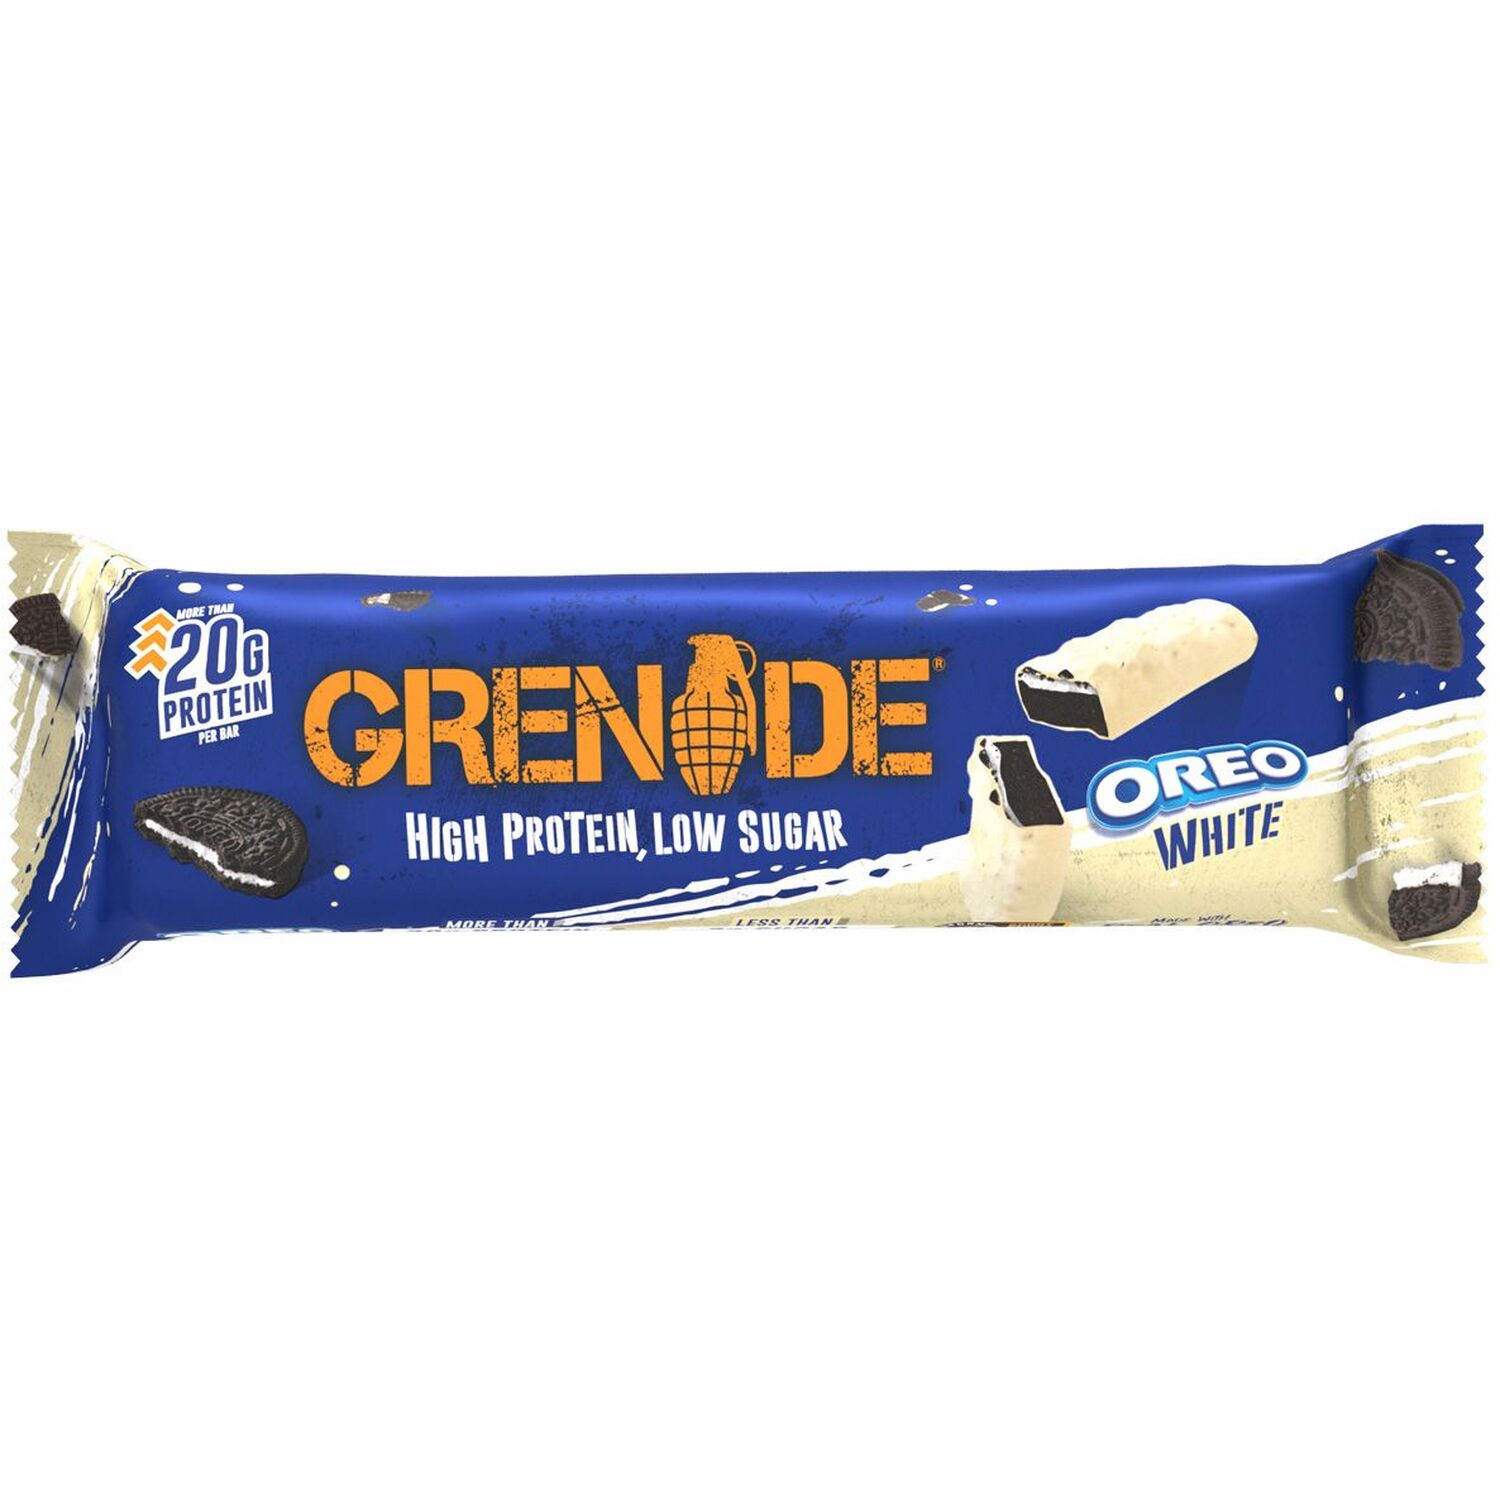 Grenade Protein Bar - Oreo White Image